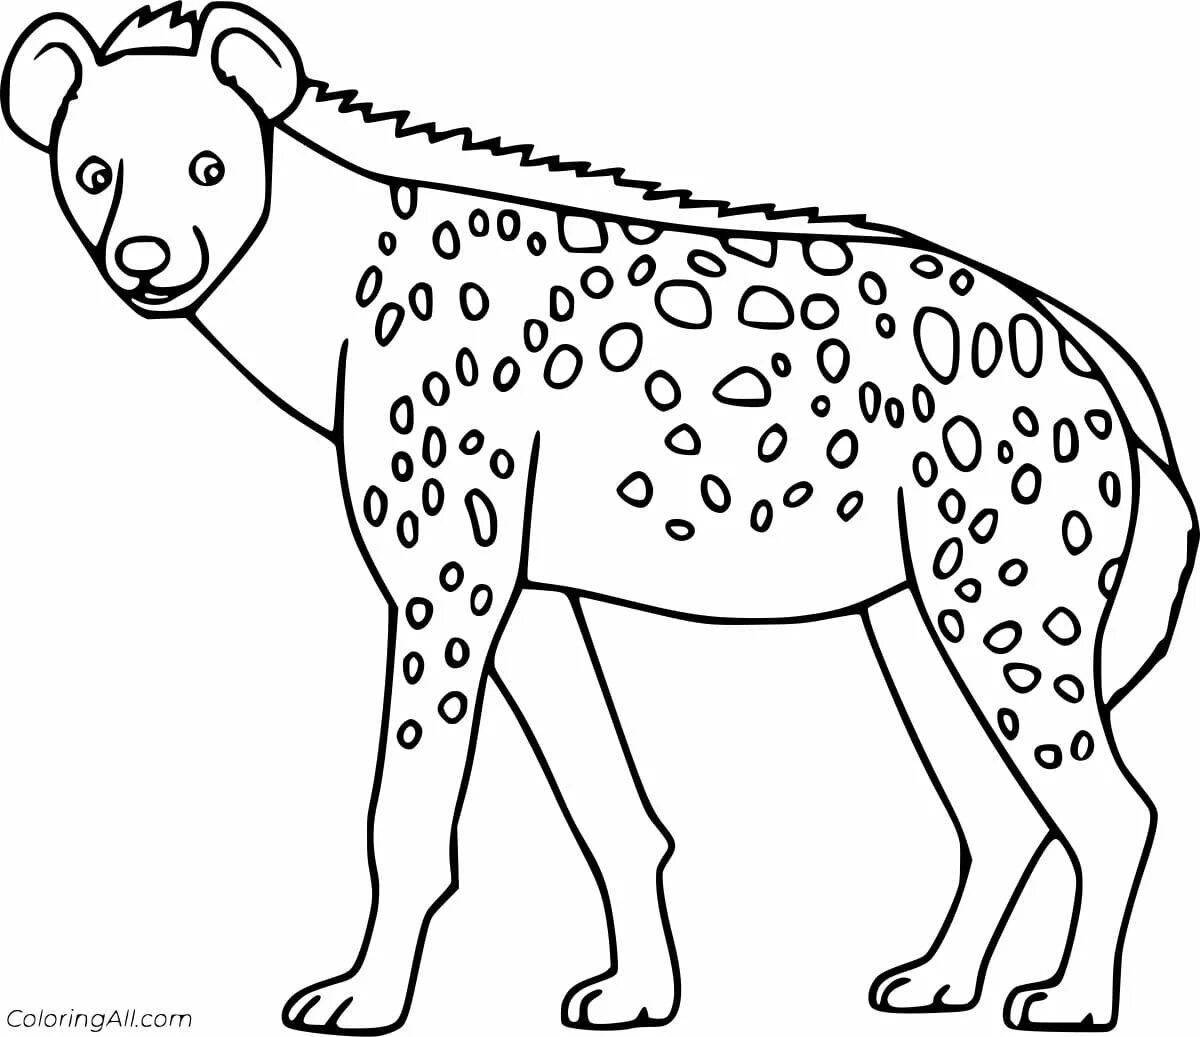 Fun coloring hyena for kids